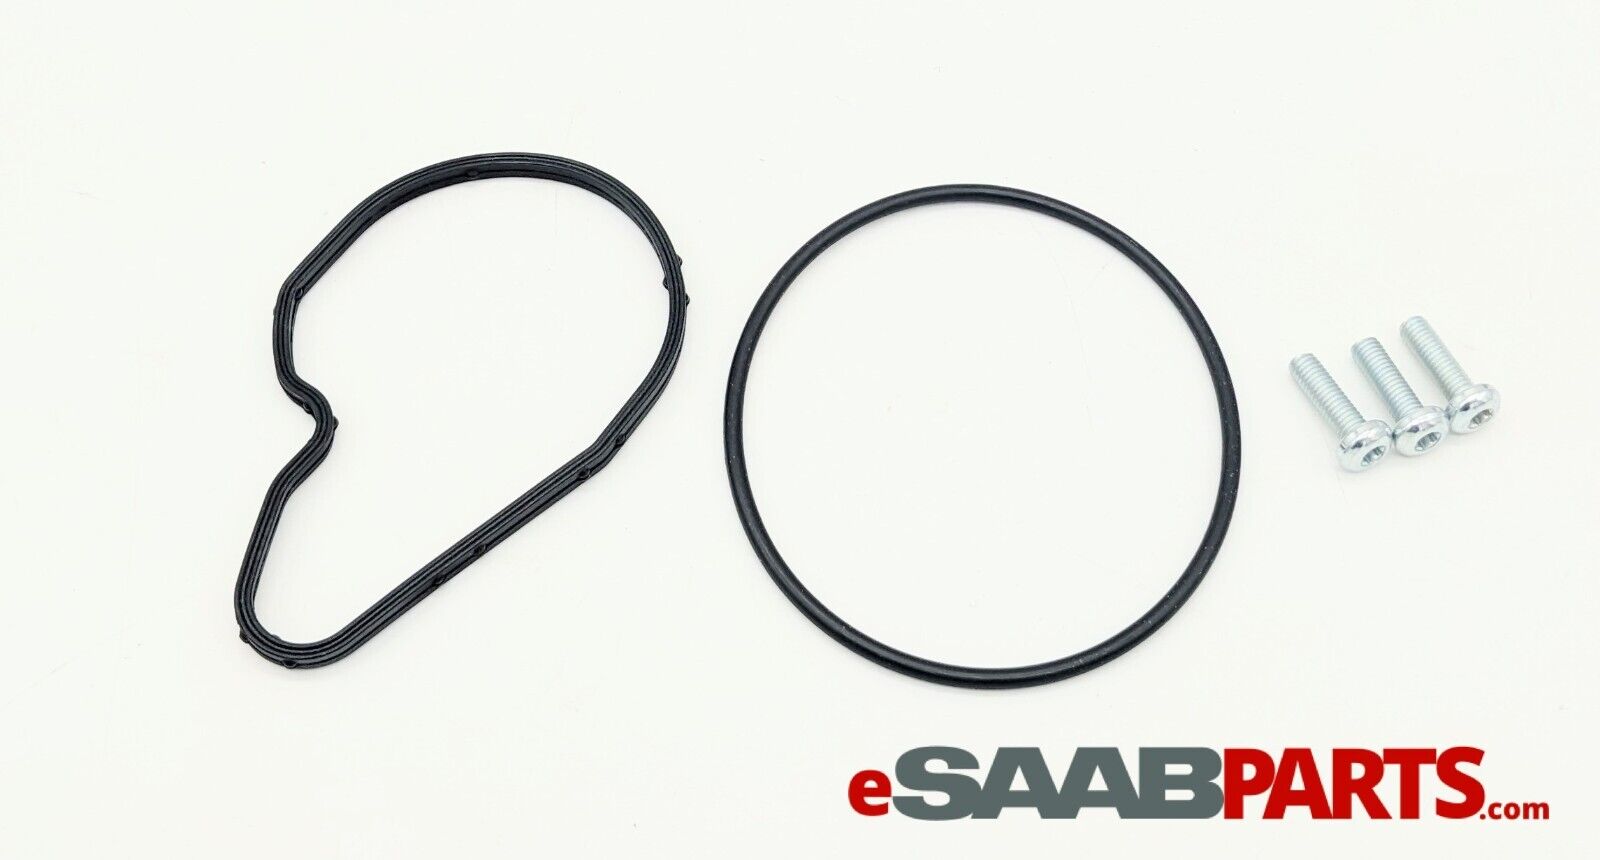 NEW Saab 9-3 Brake Vacuum Pump O-Ring Seal Kit (03-11 2.0T, Buick Regal Verano)